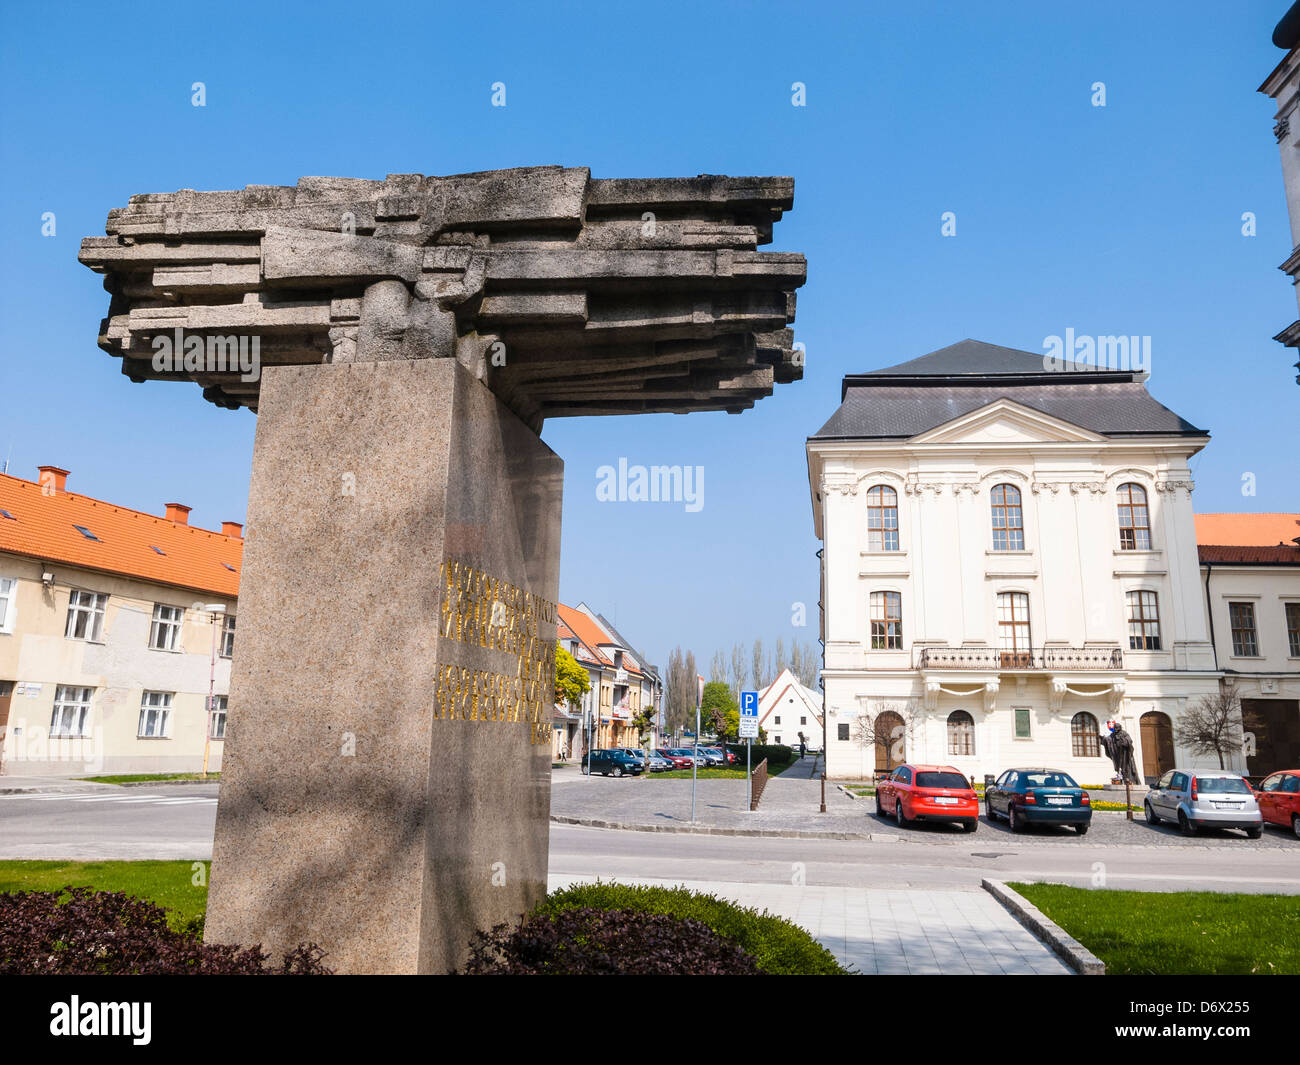 SNP memorial, Univerzitne namestie, Trnava, Slovakia Stock Photo